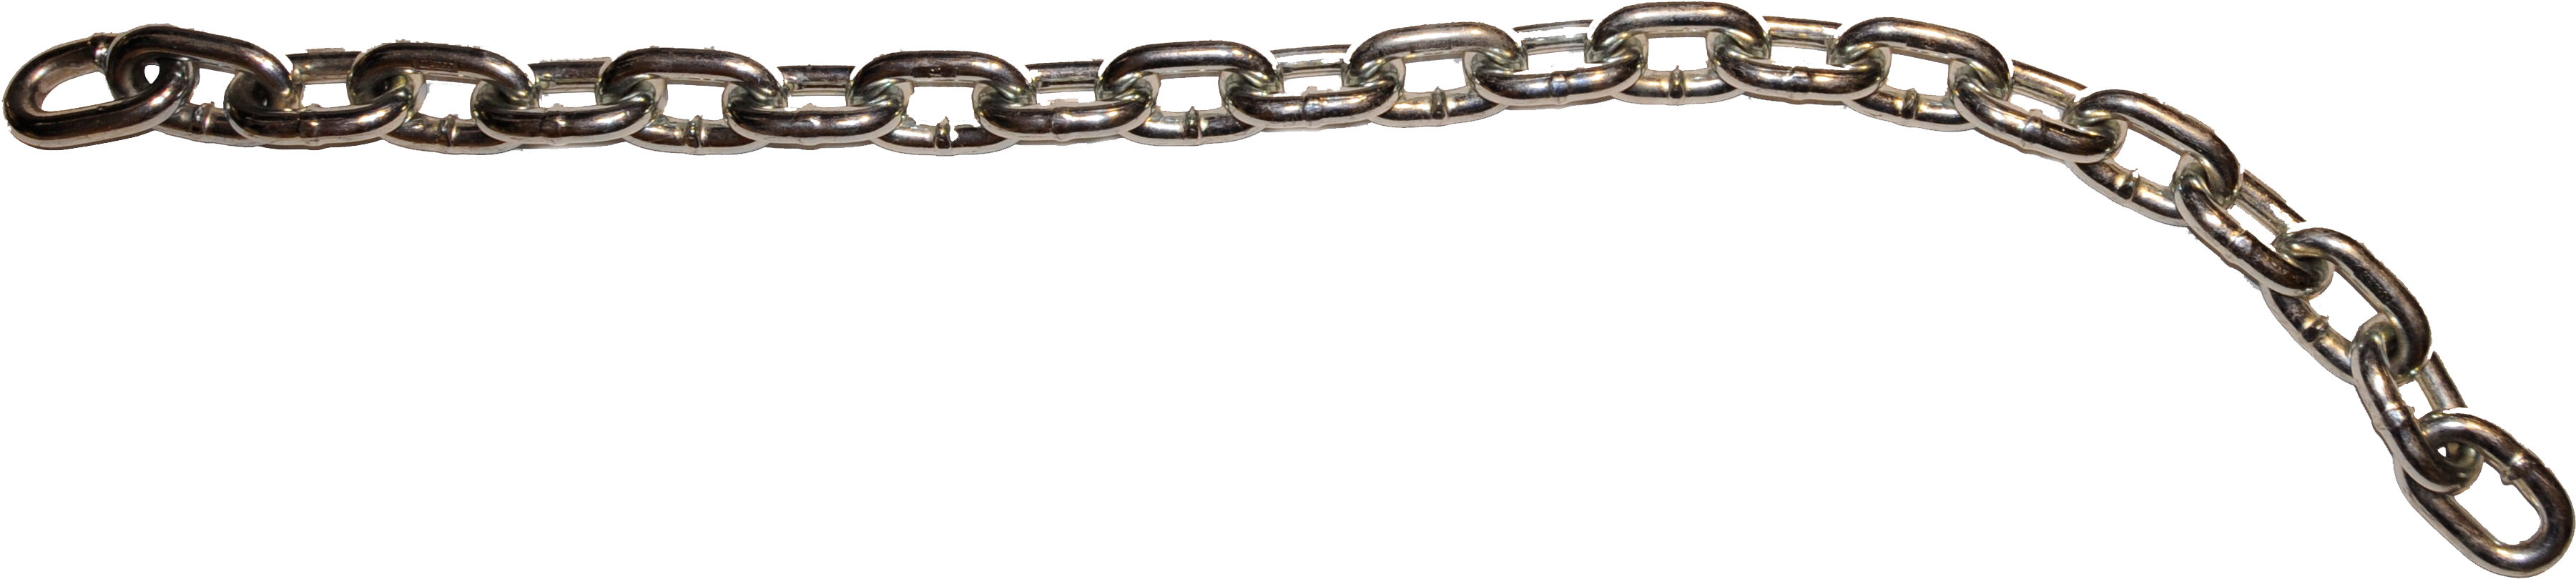 Metal Chain Link Segment PNG